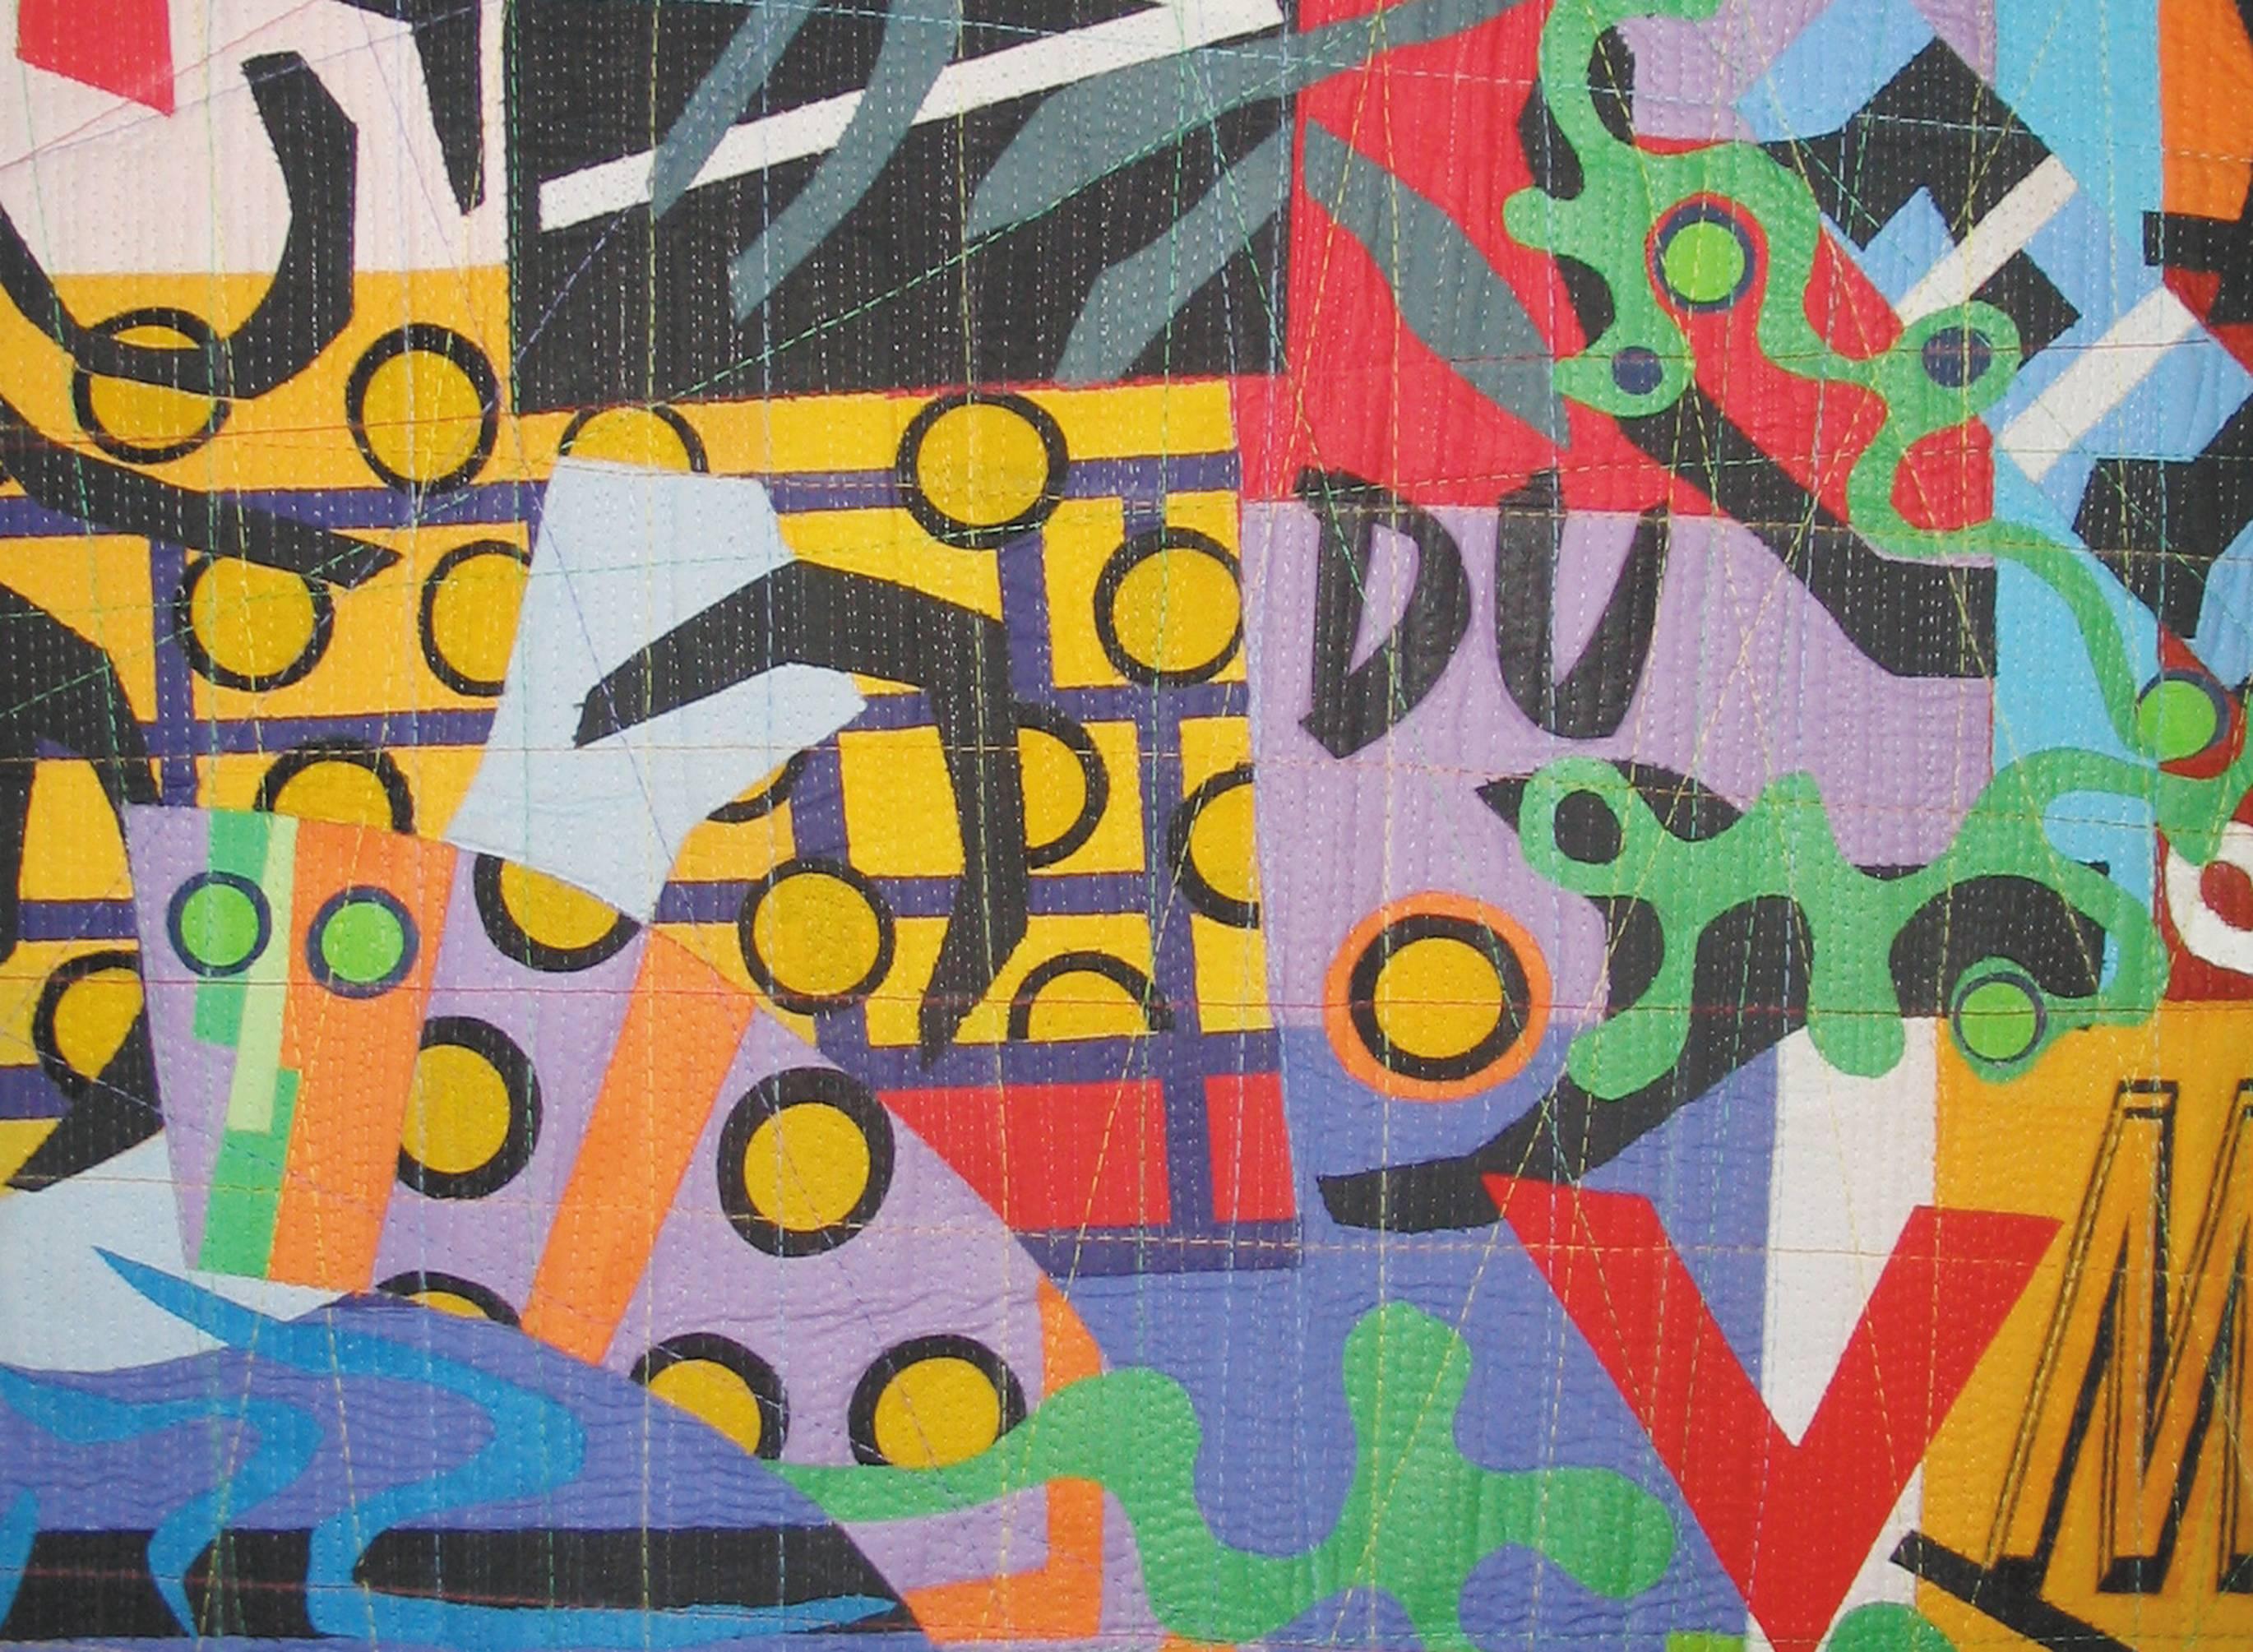 Taffiti Graffiti, Contemporary Quilt - Abstract Mixed Media Art by Bethan Ash